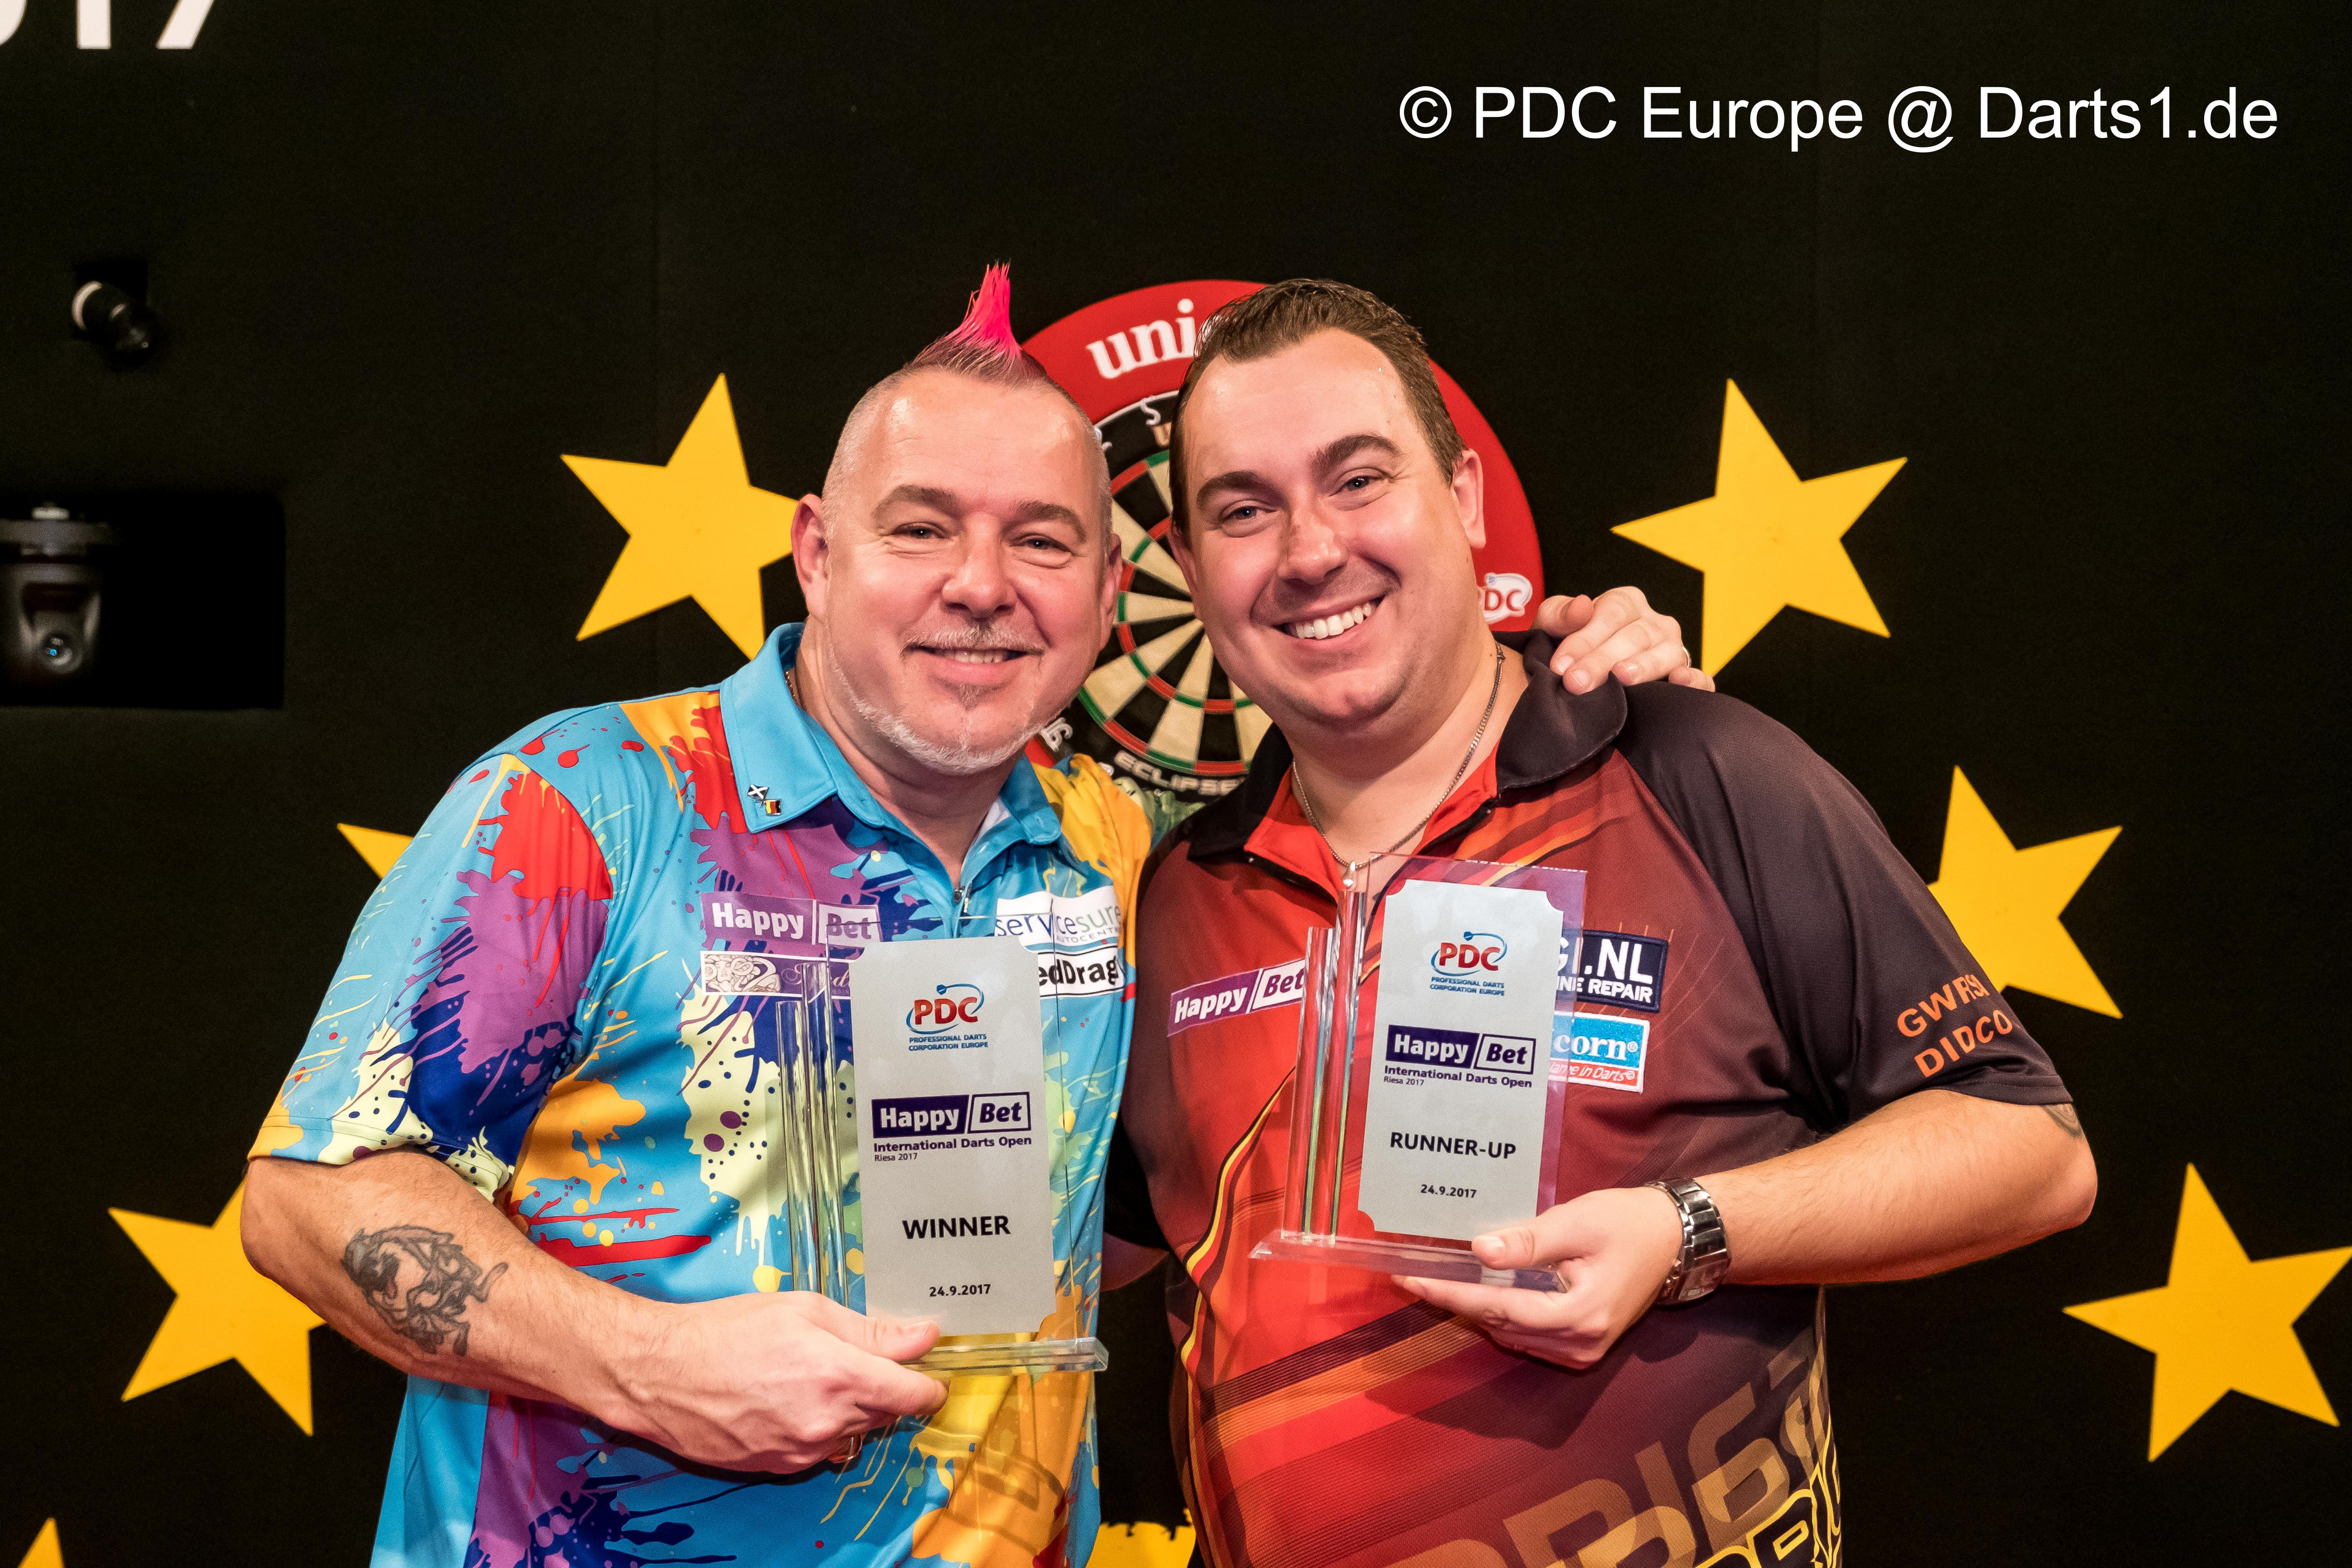 pdc european tour international darts open